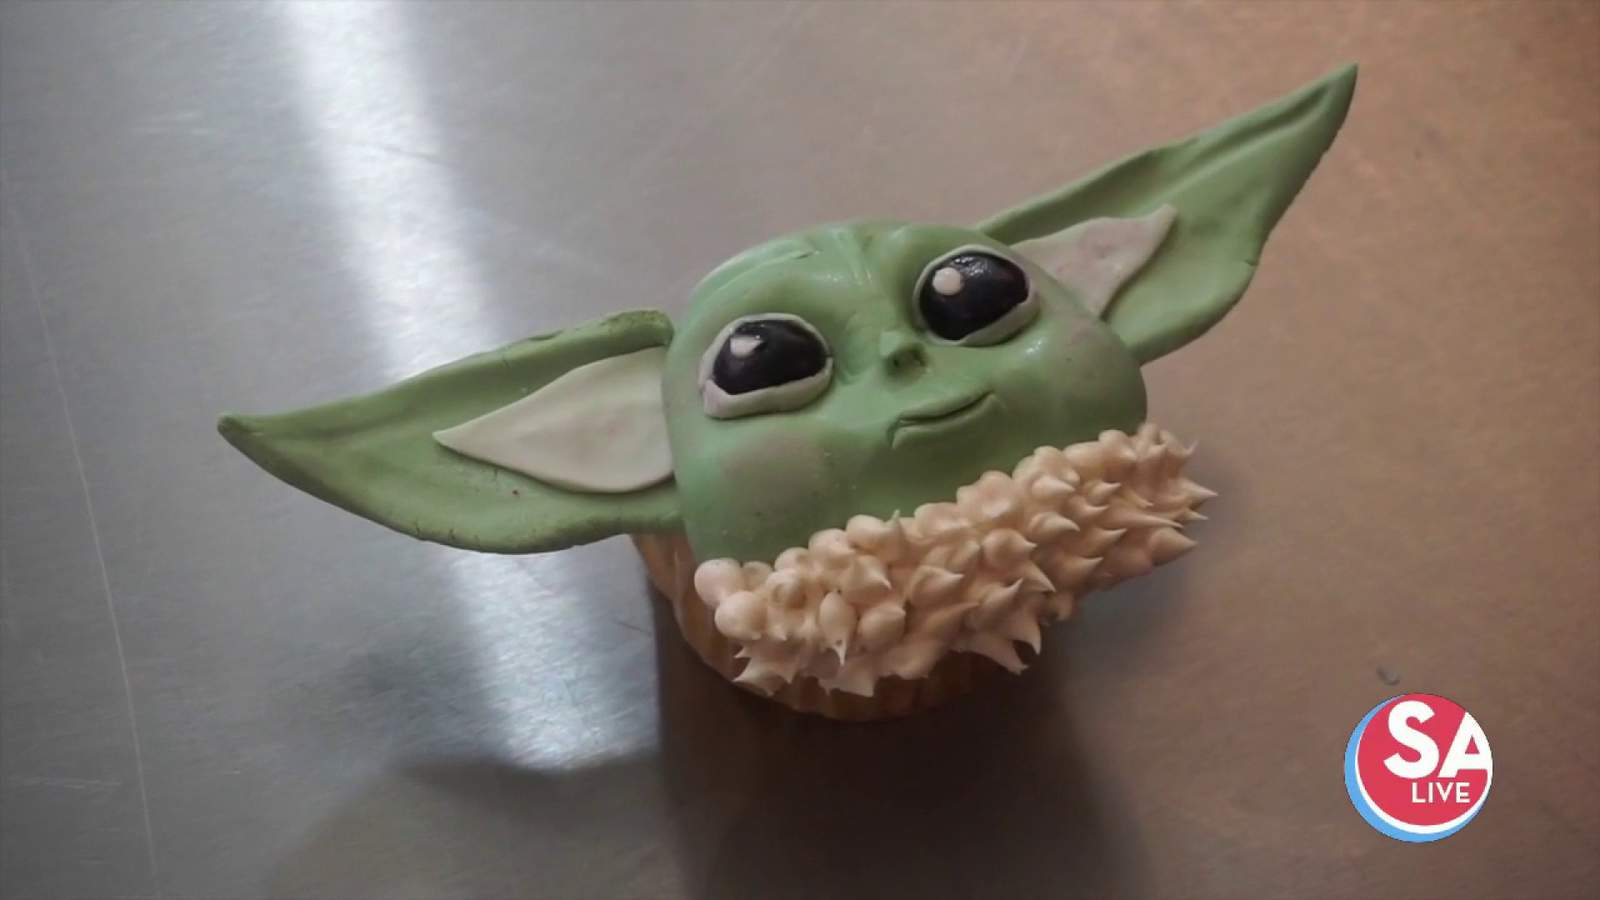 Baby Yoda cupcakes